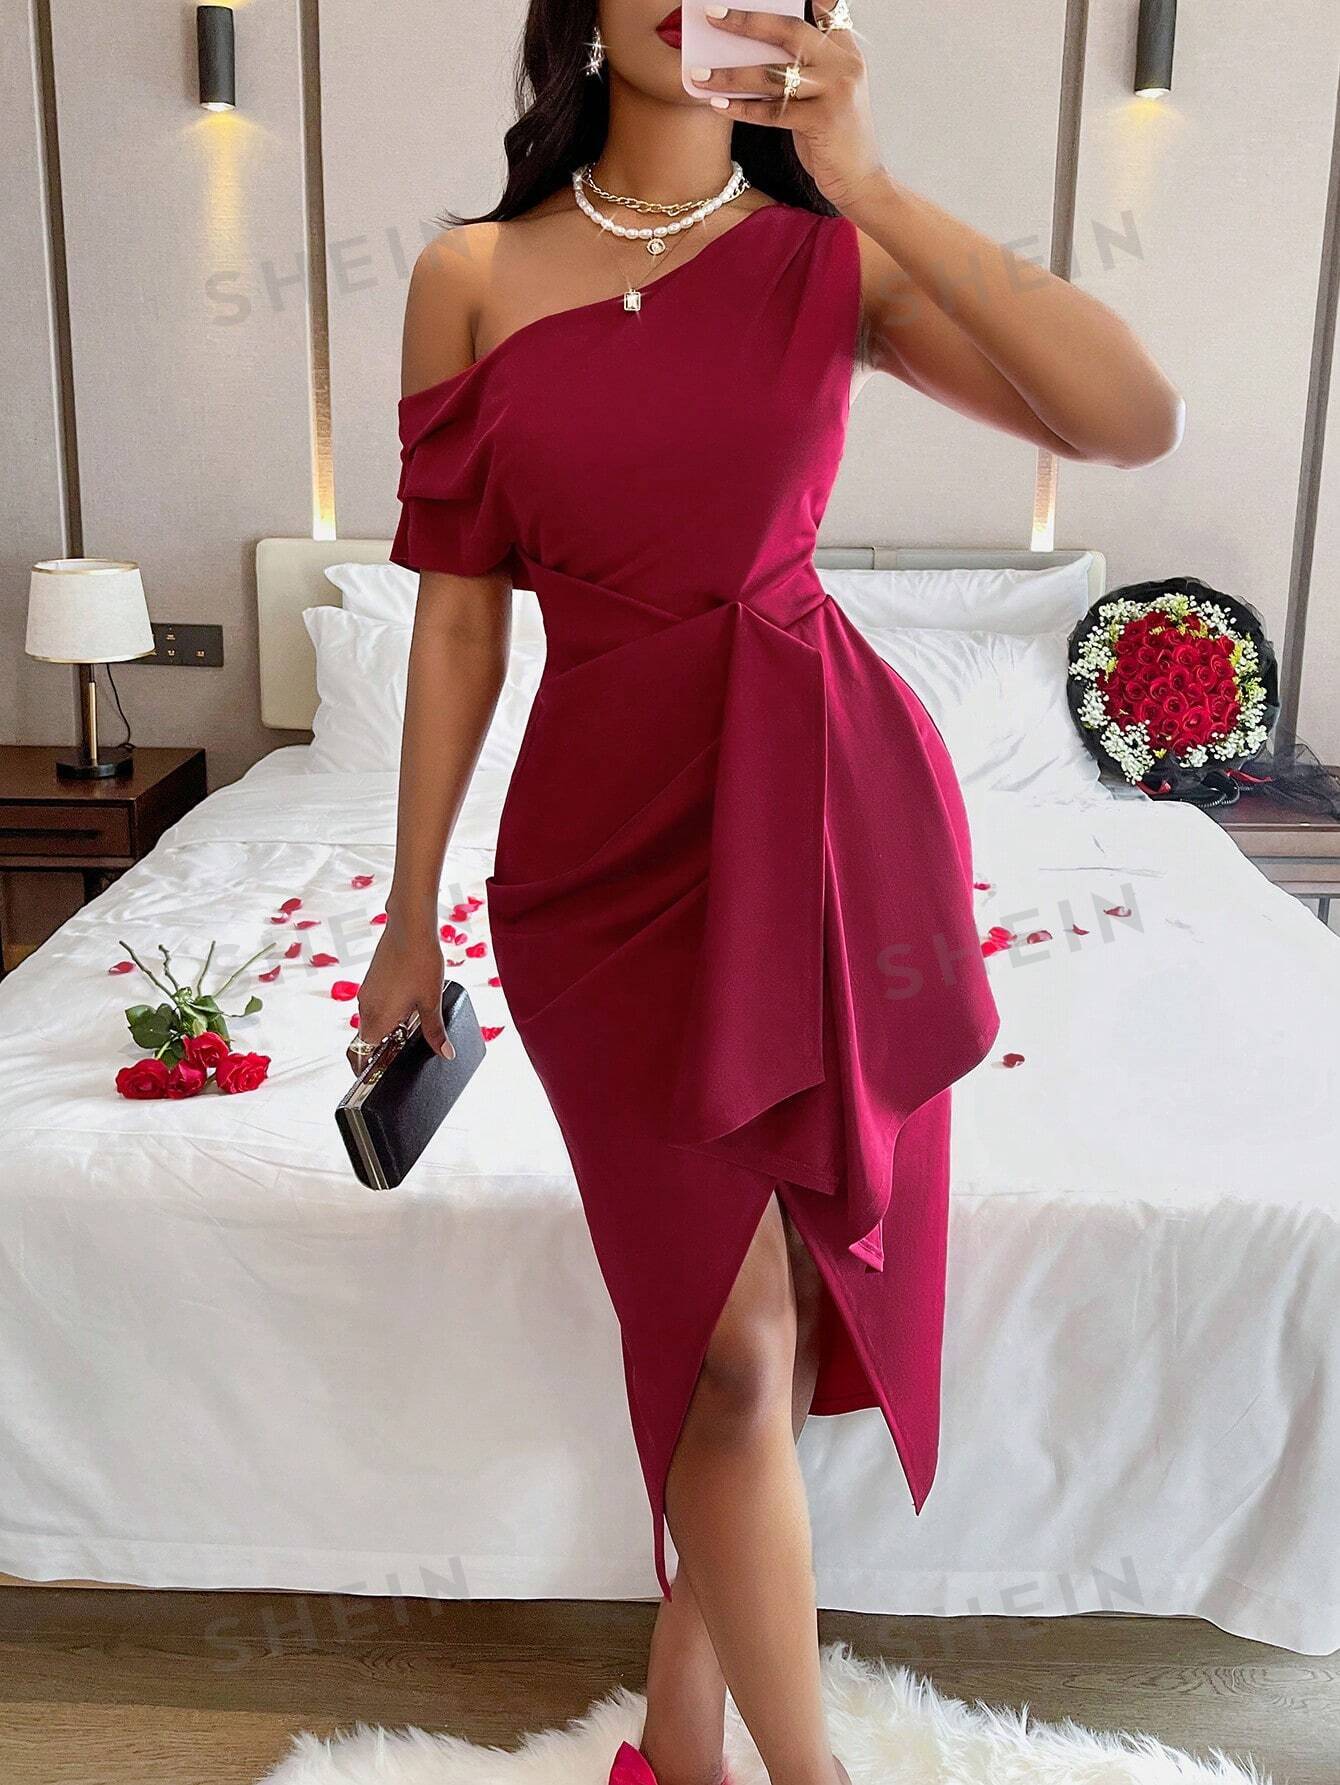 Slayr Valentine New Year's Asymmetrical Neck Ruffle Trim Club Evening Gown Hristmas Red Dress Sexy Outfits Bodycon Dress